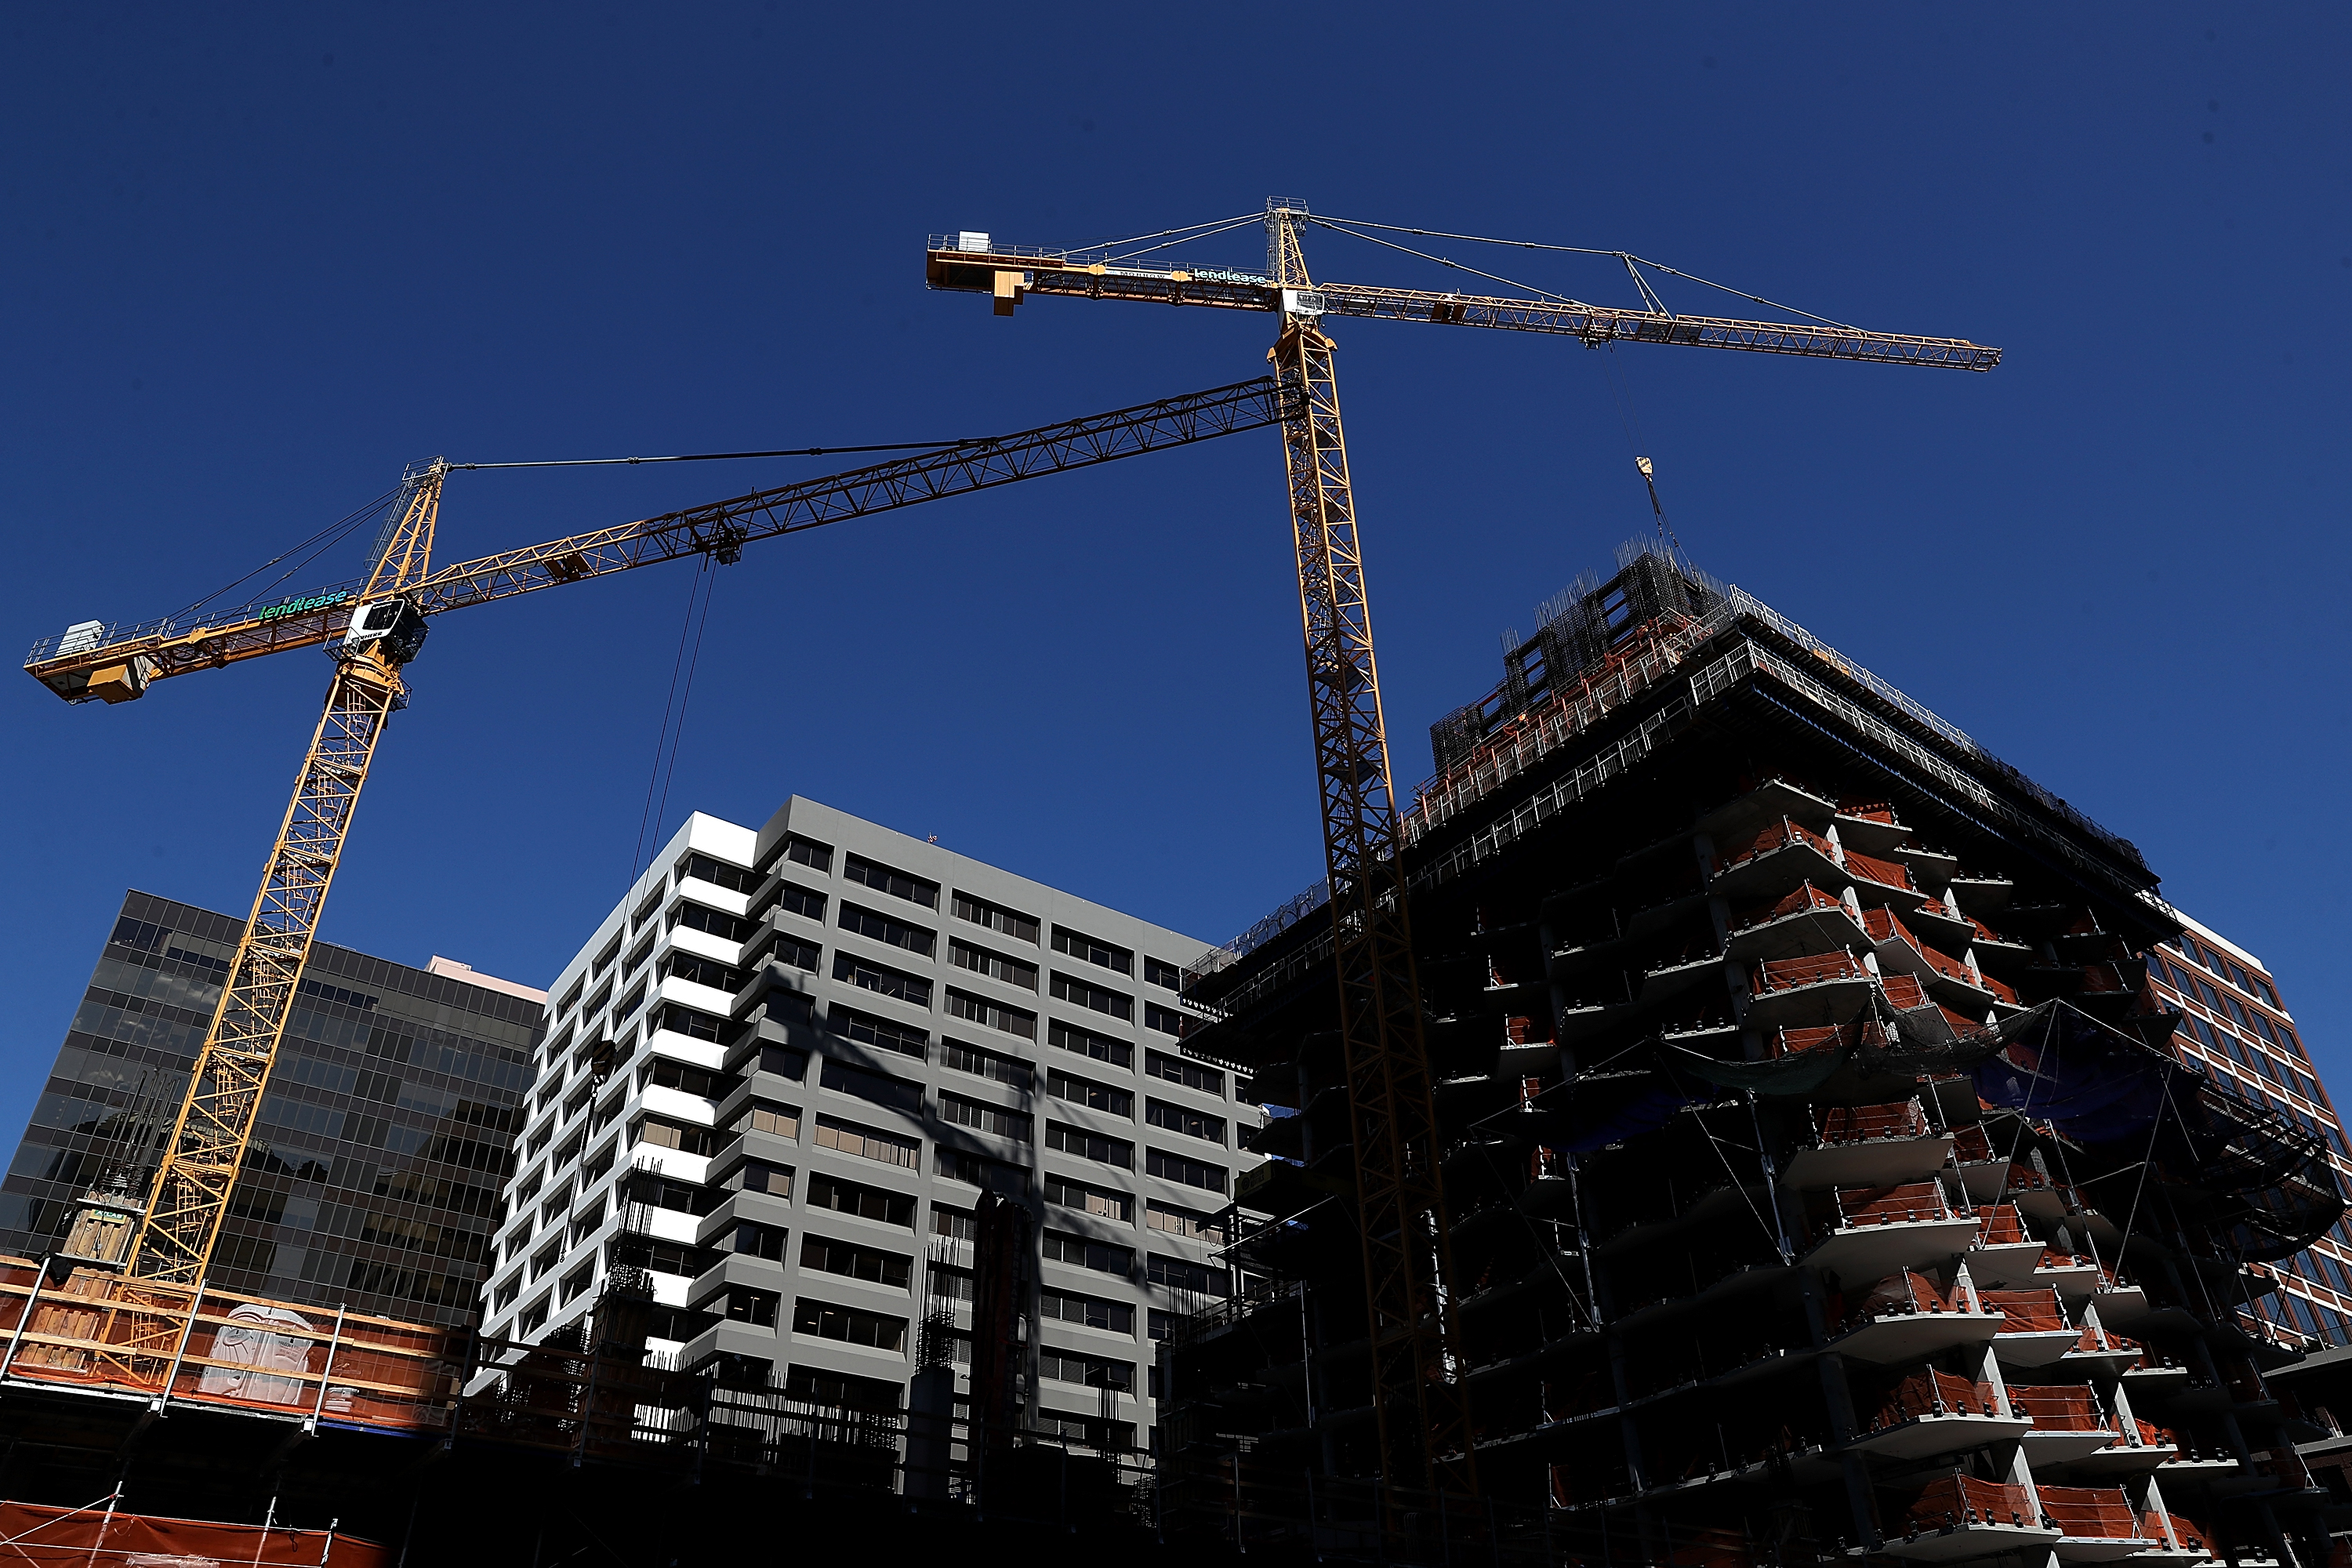 Construction cranes hang over a building under construction.